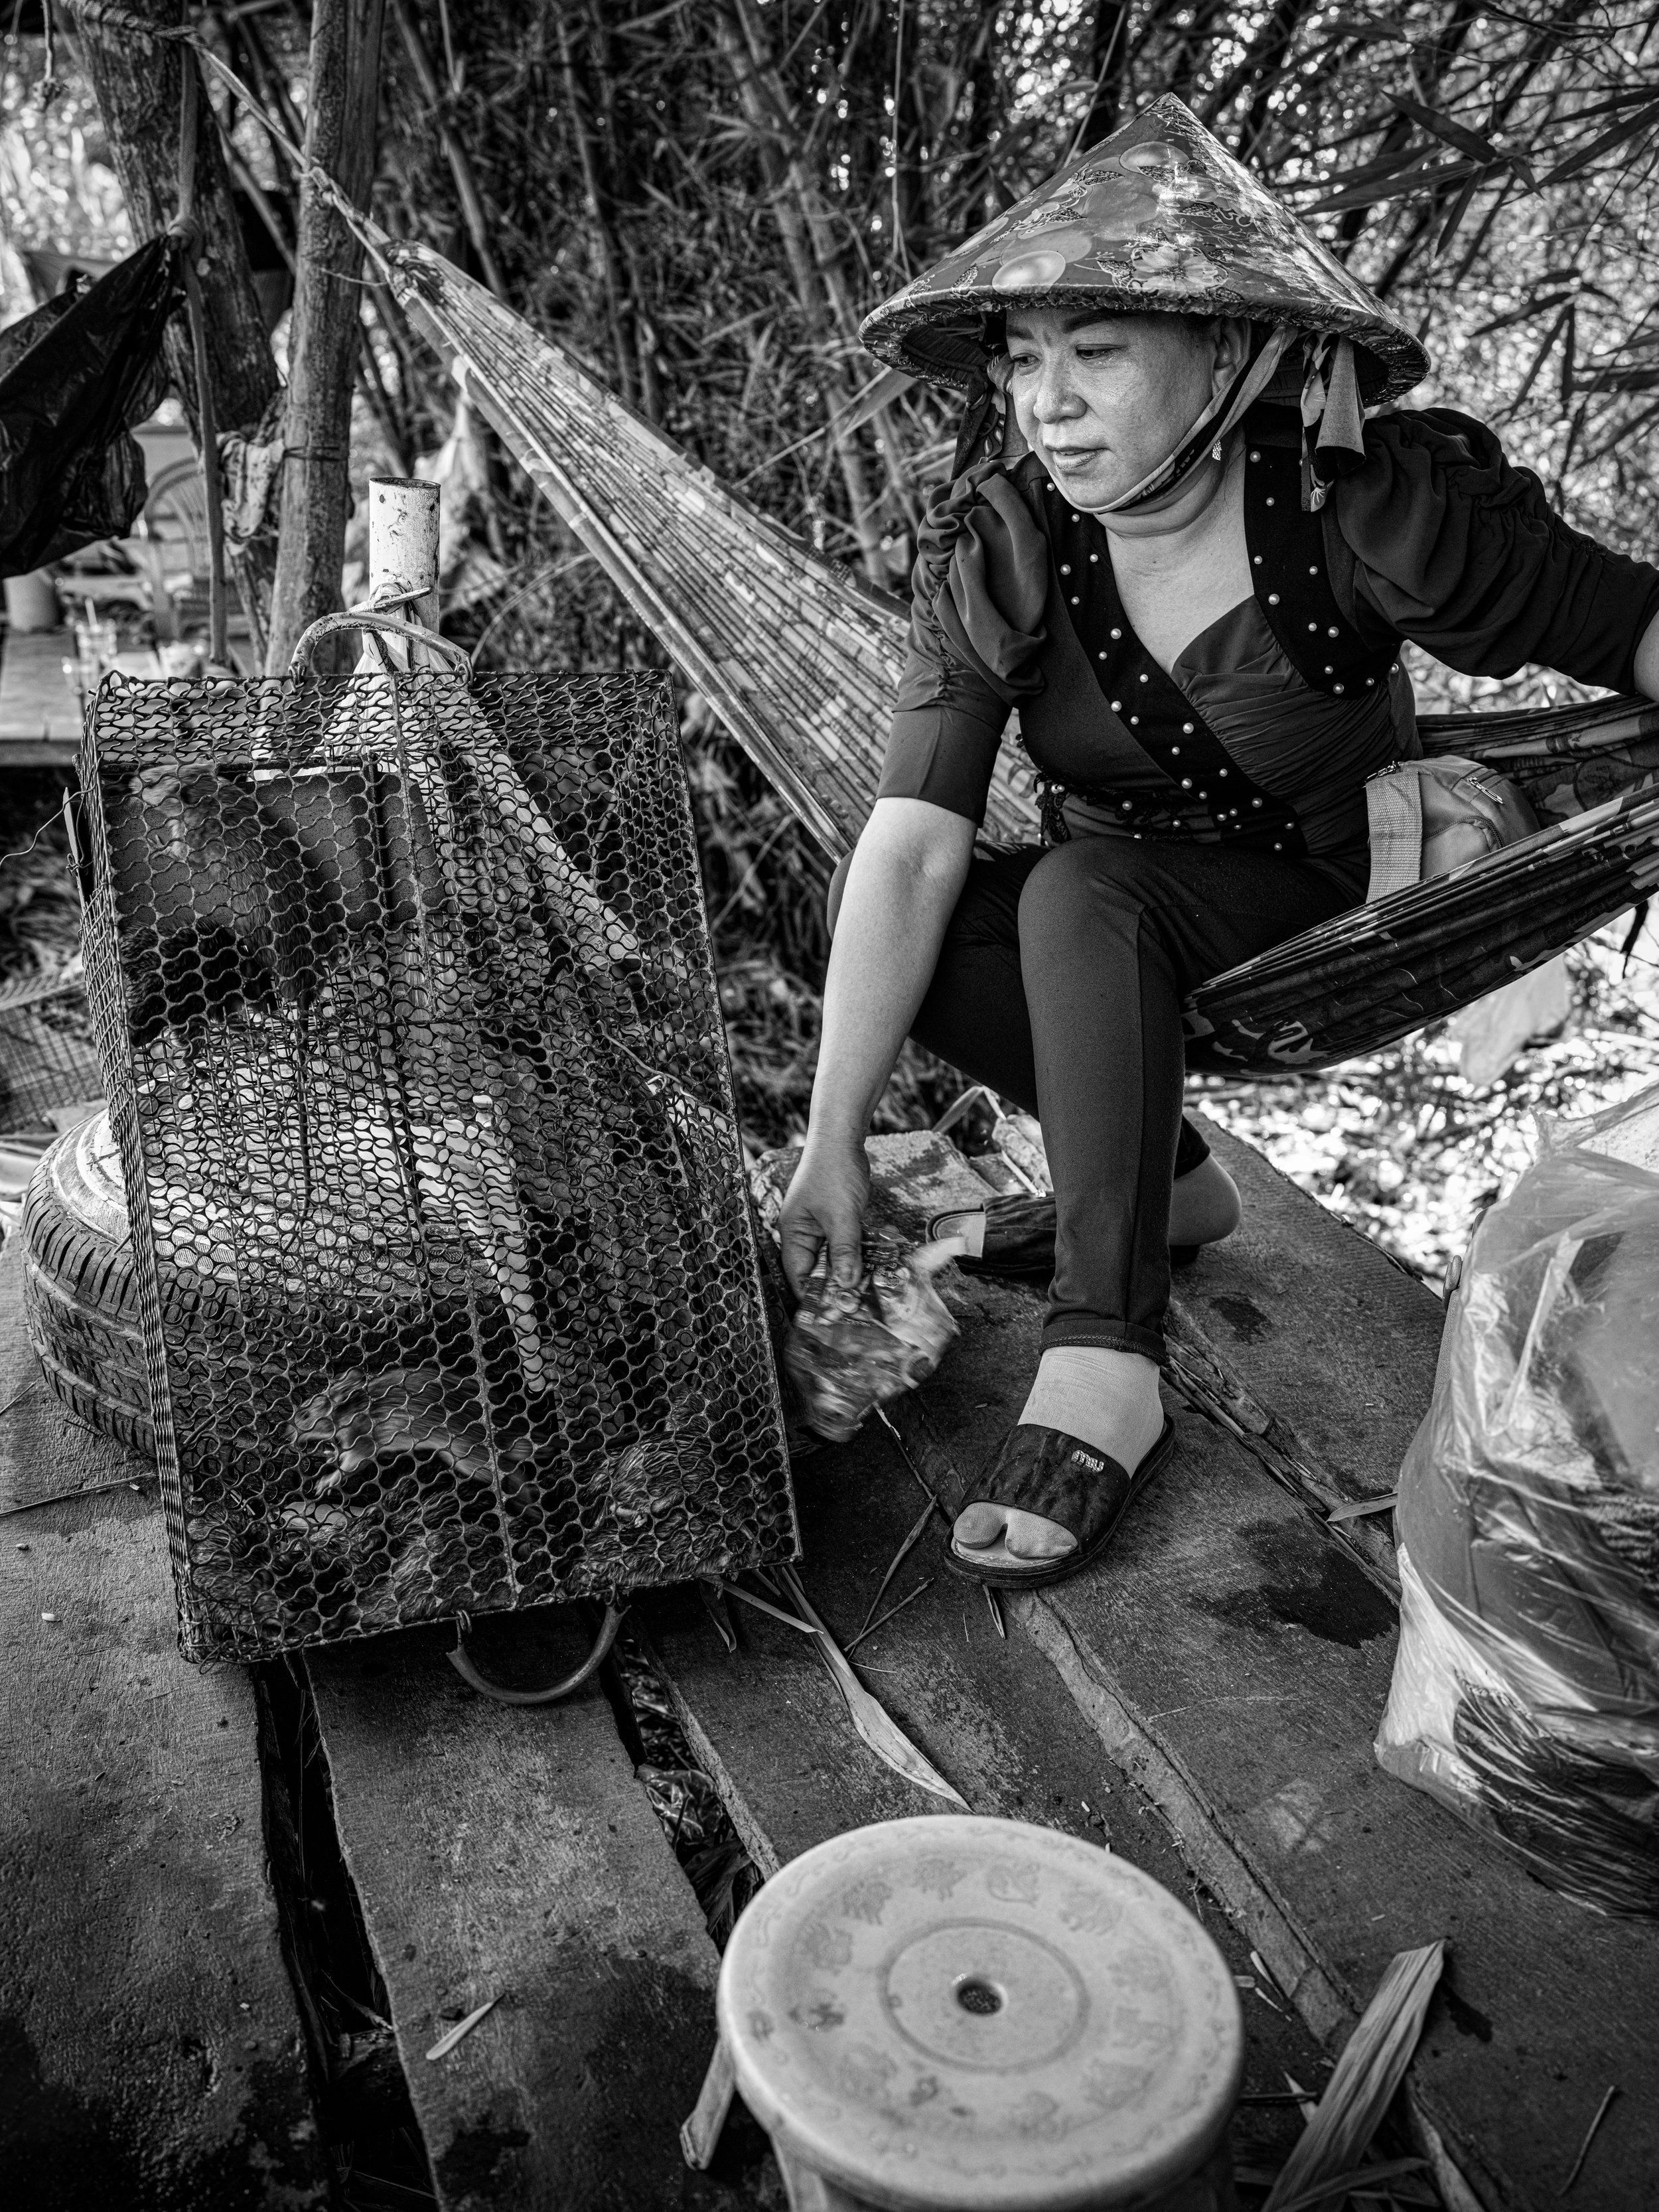  rat meat seller. best ones caught in rice fields. $3 per kilo. Near cao lanh 